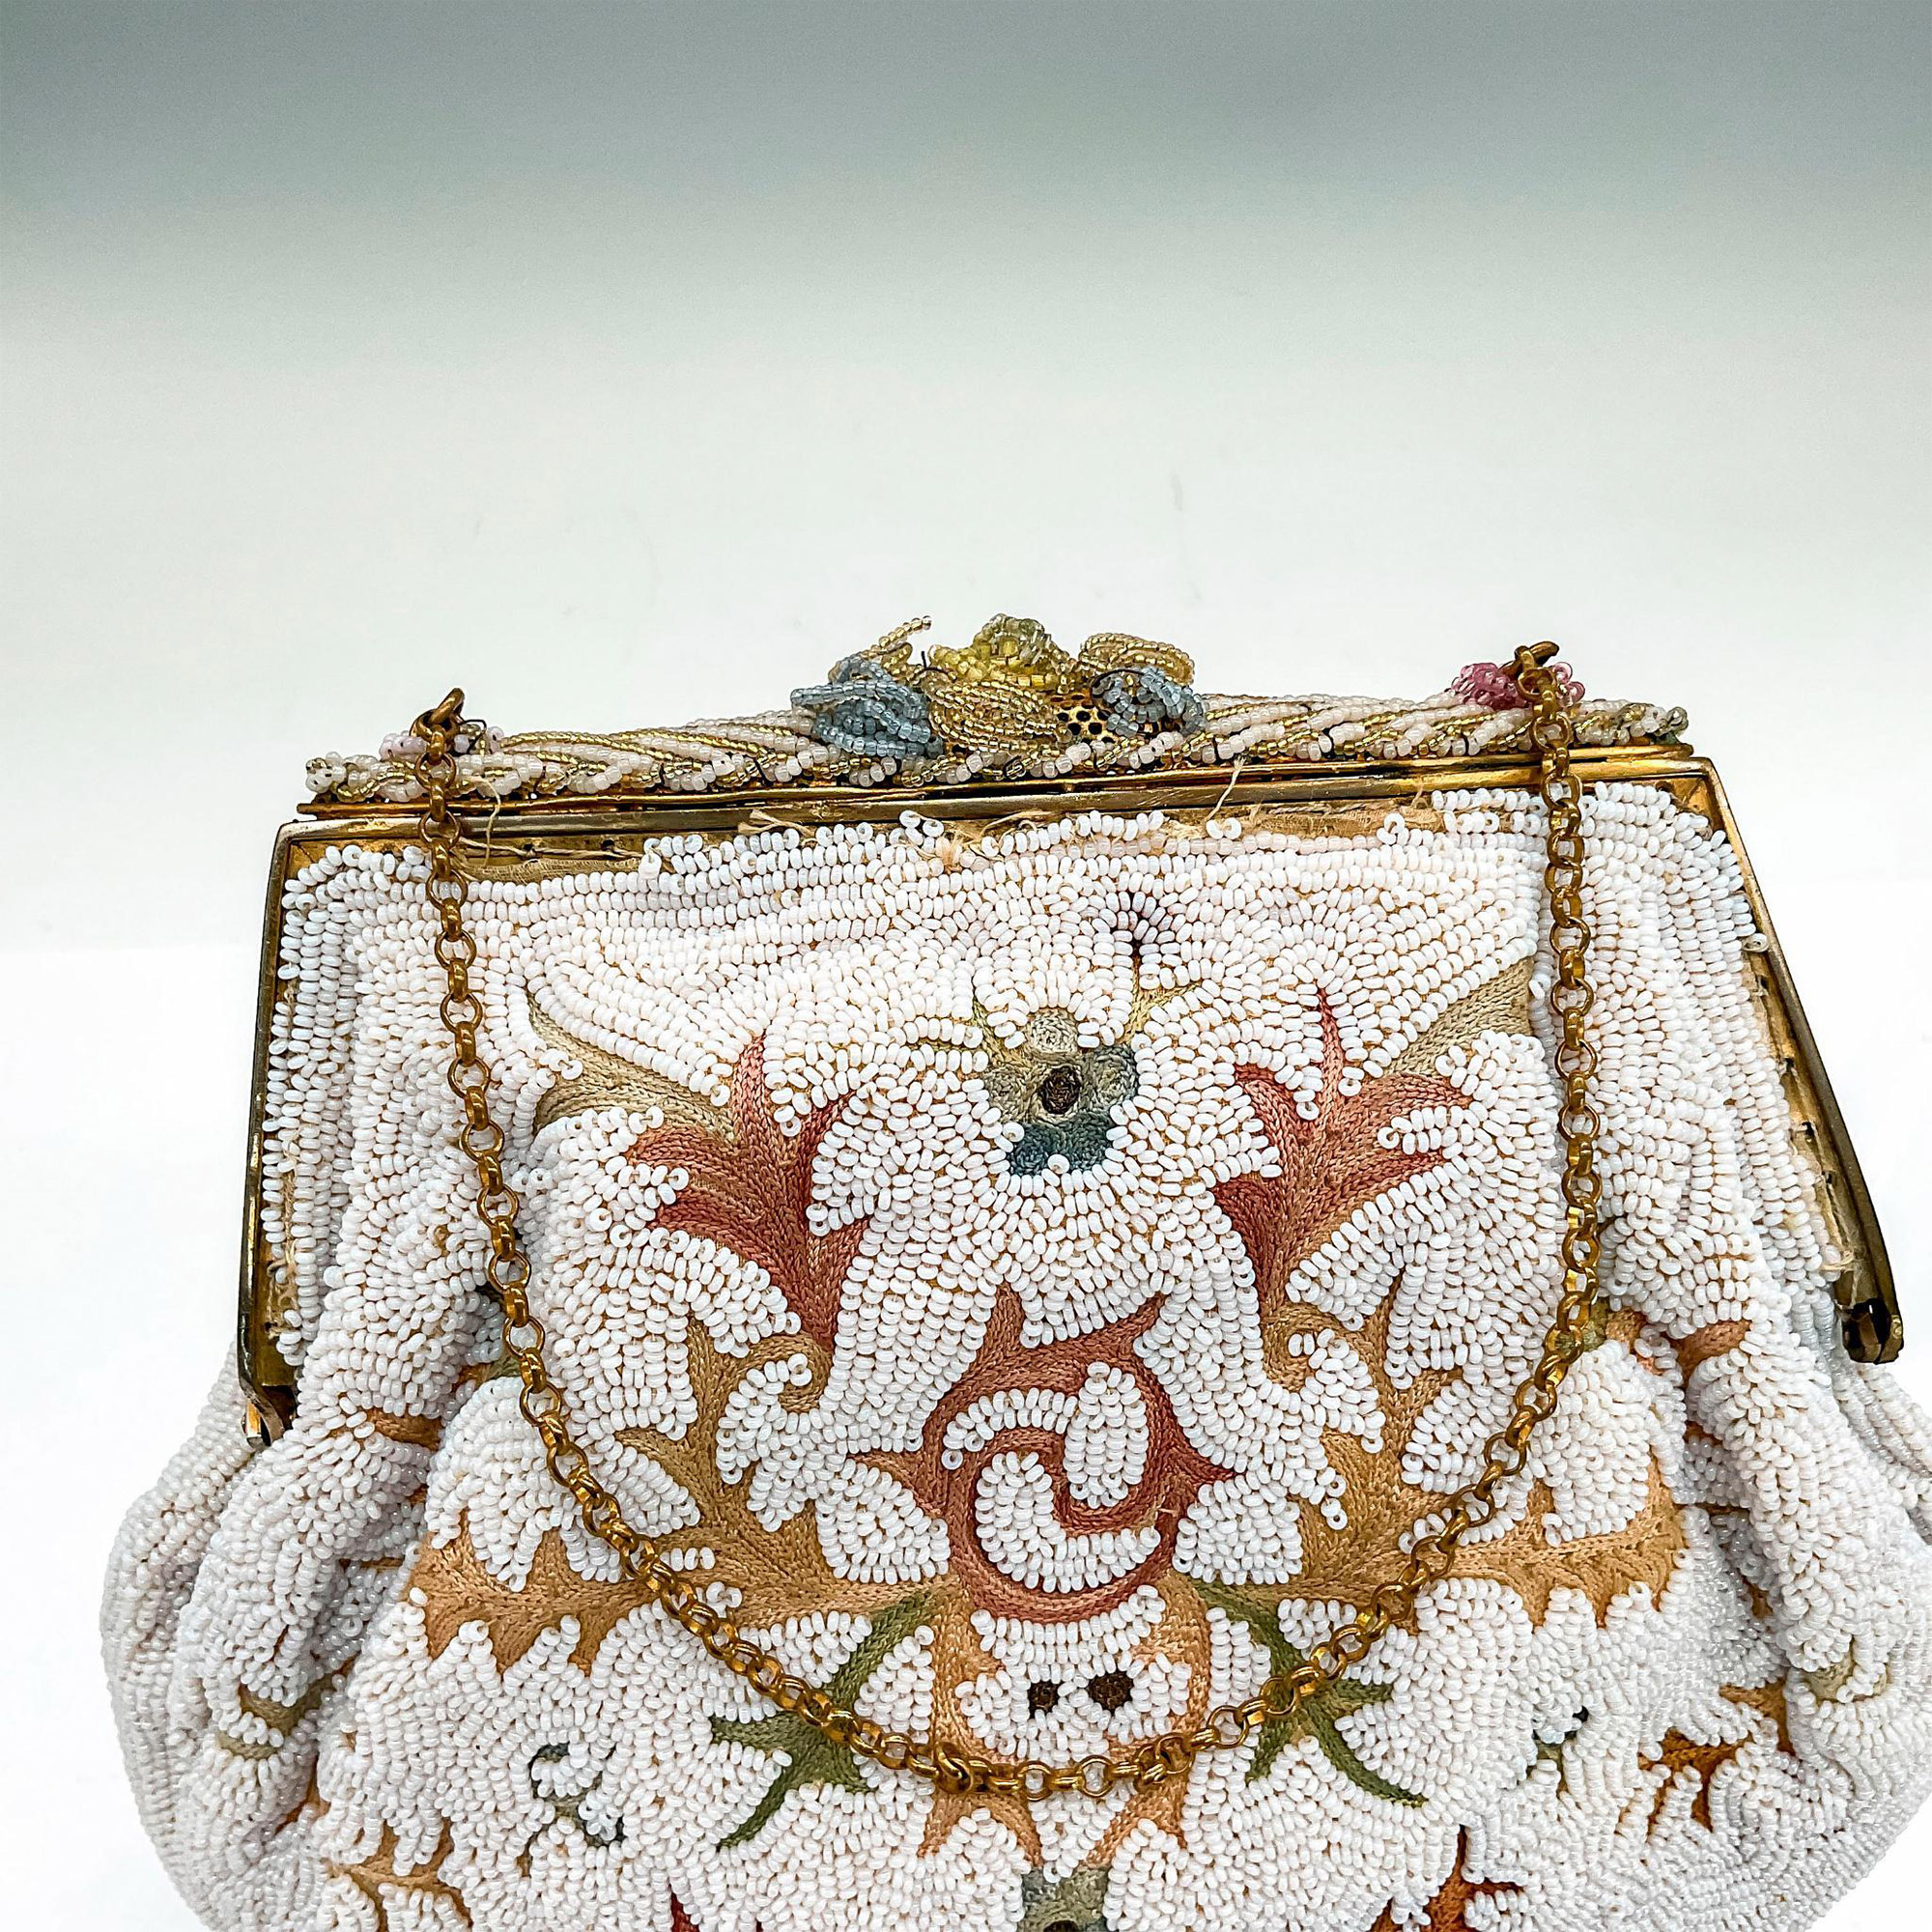 2pc Vintage White/Multi-Color Beaded Handbags - Image 5 of 5